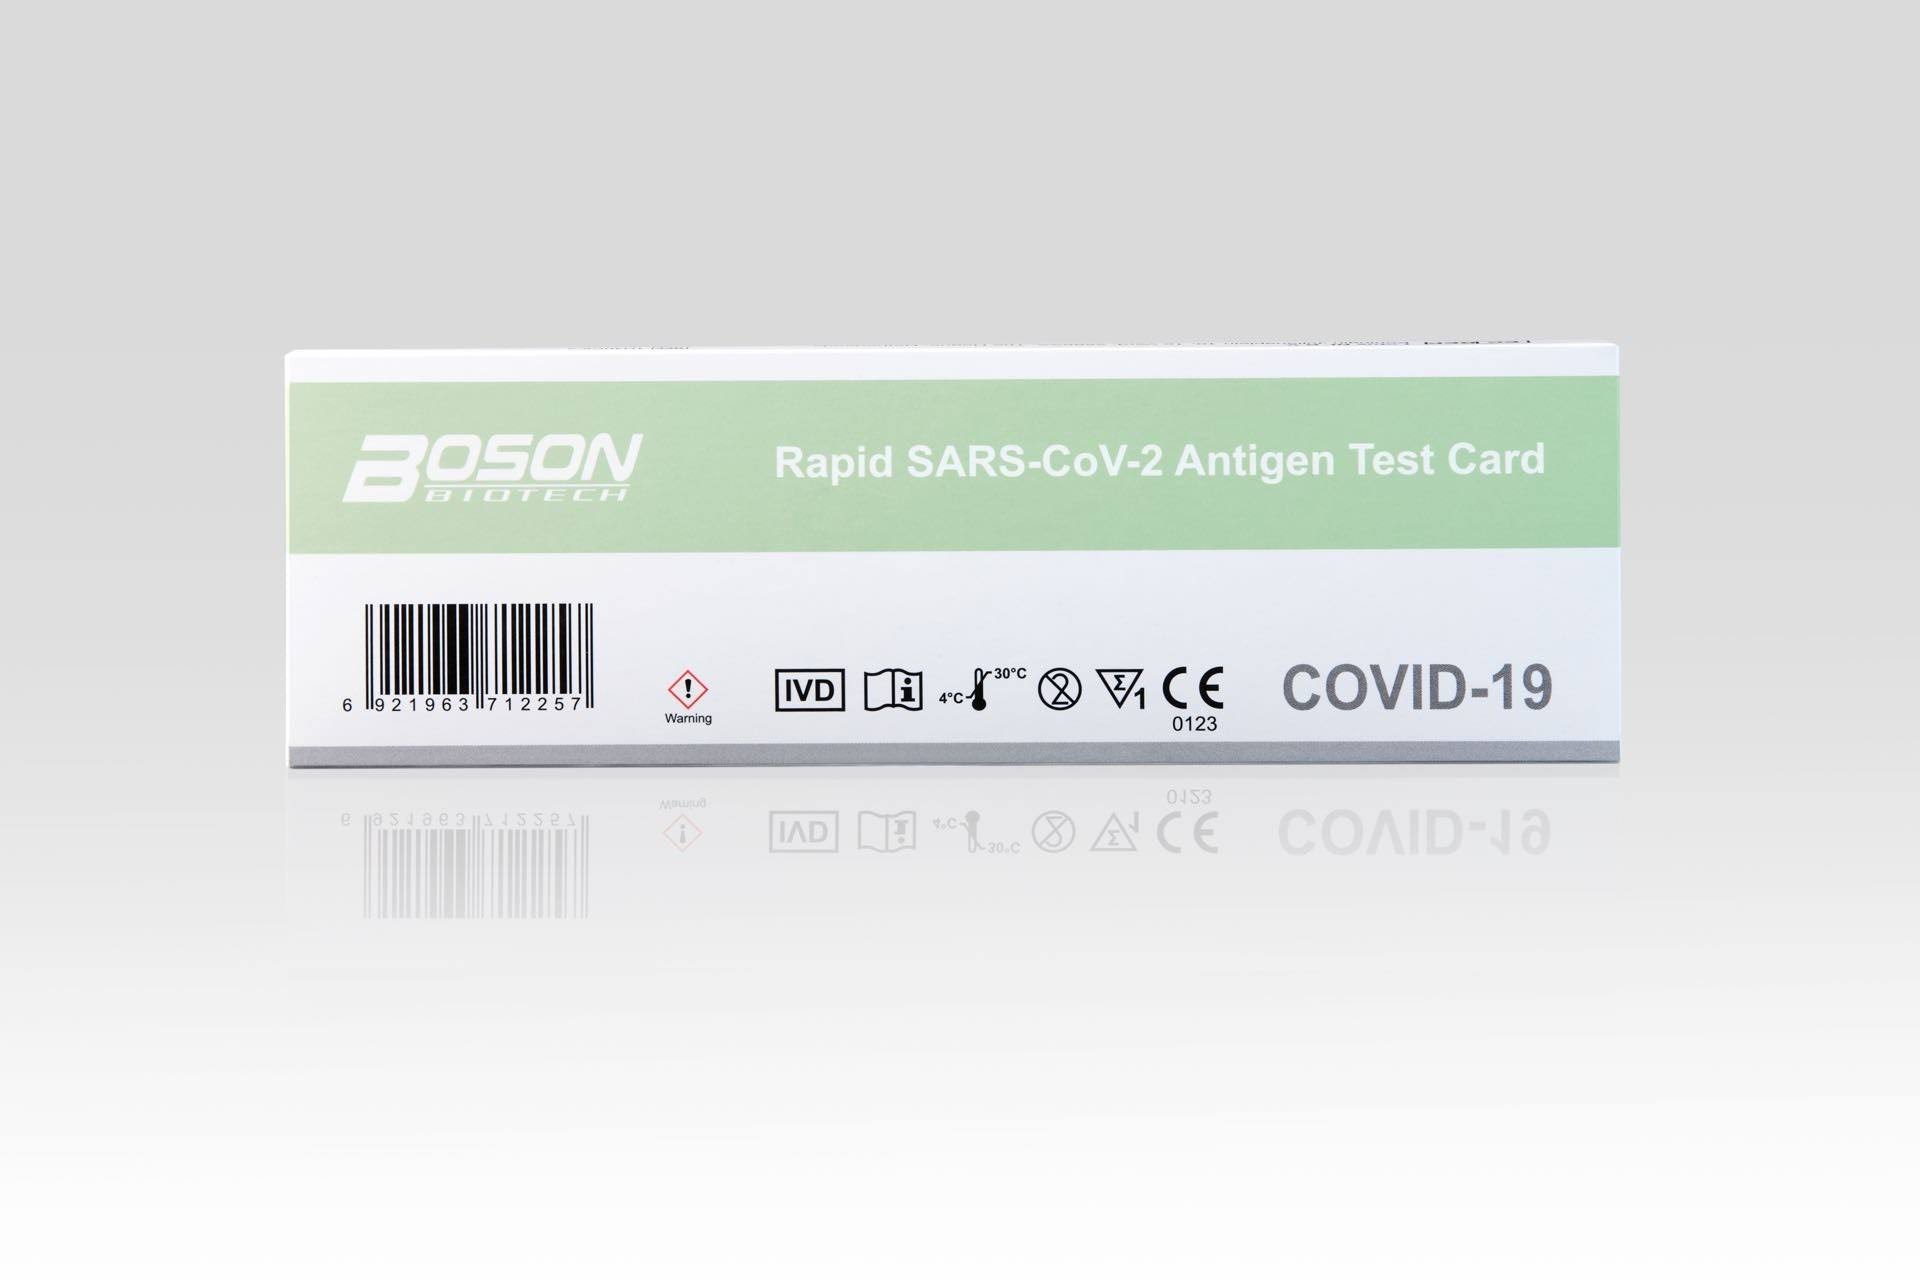 Boson Rapid Sars-Cov-2 Antigen Test